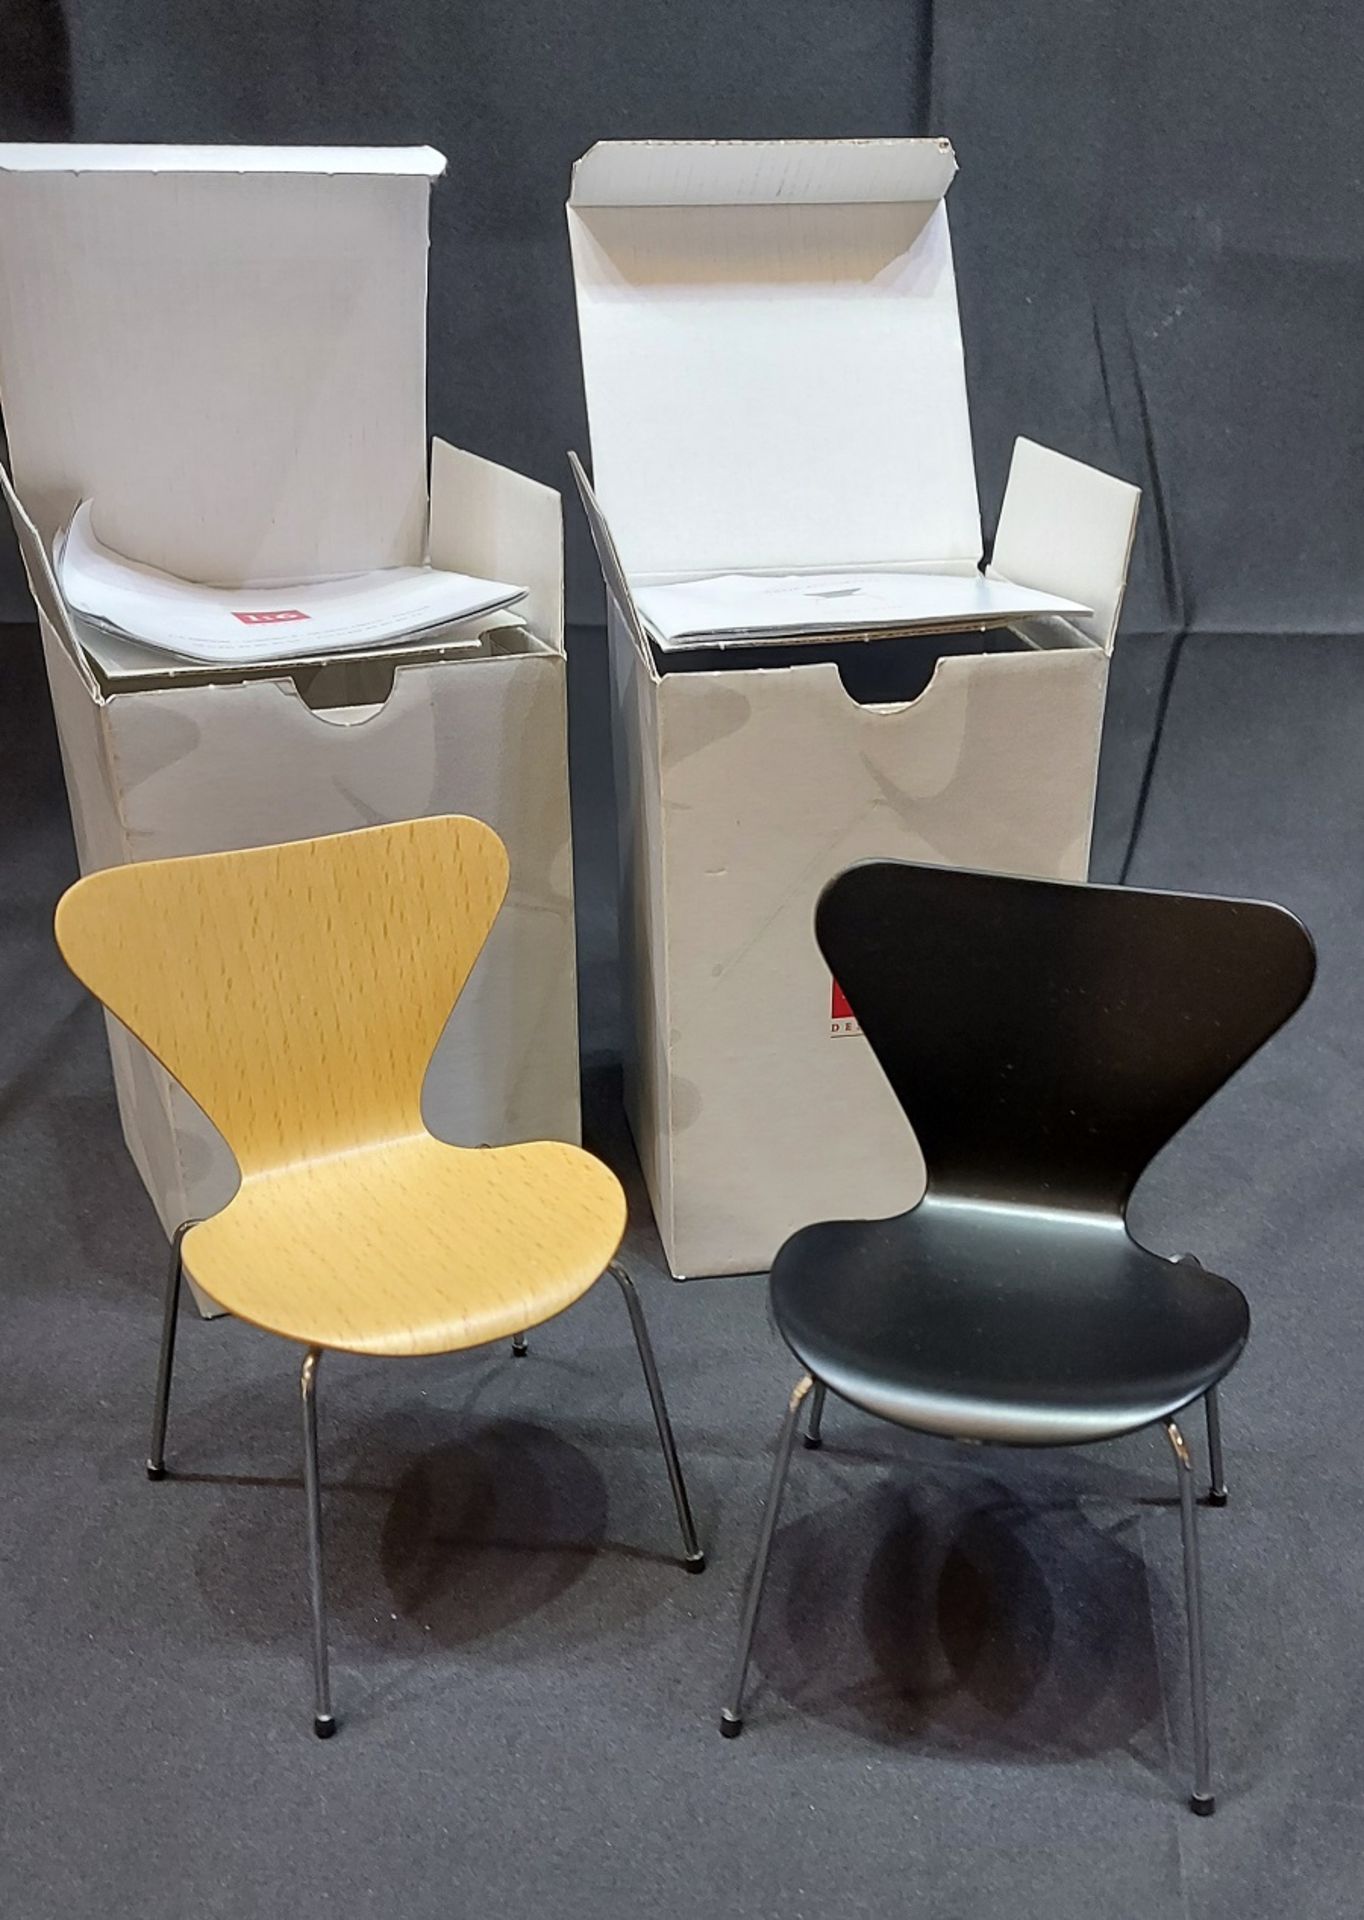 Sammlerstücke! 2 Stk. Arne Jacobsen Museum Miniatur Stuhl Kollektion 1x buche 1x schwarz - Bild 9 aus 11